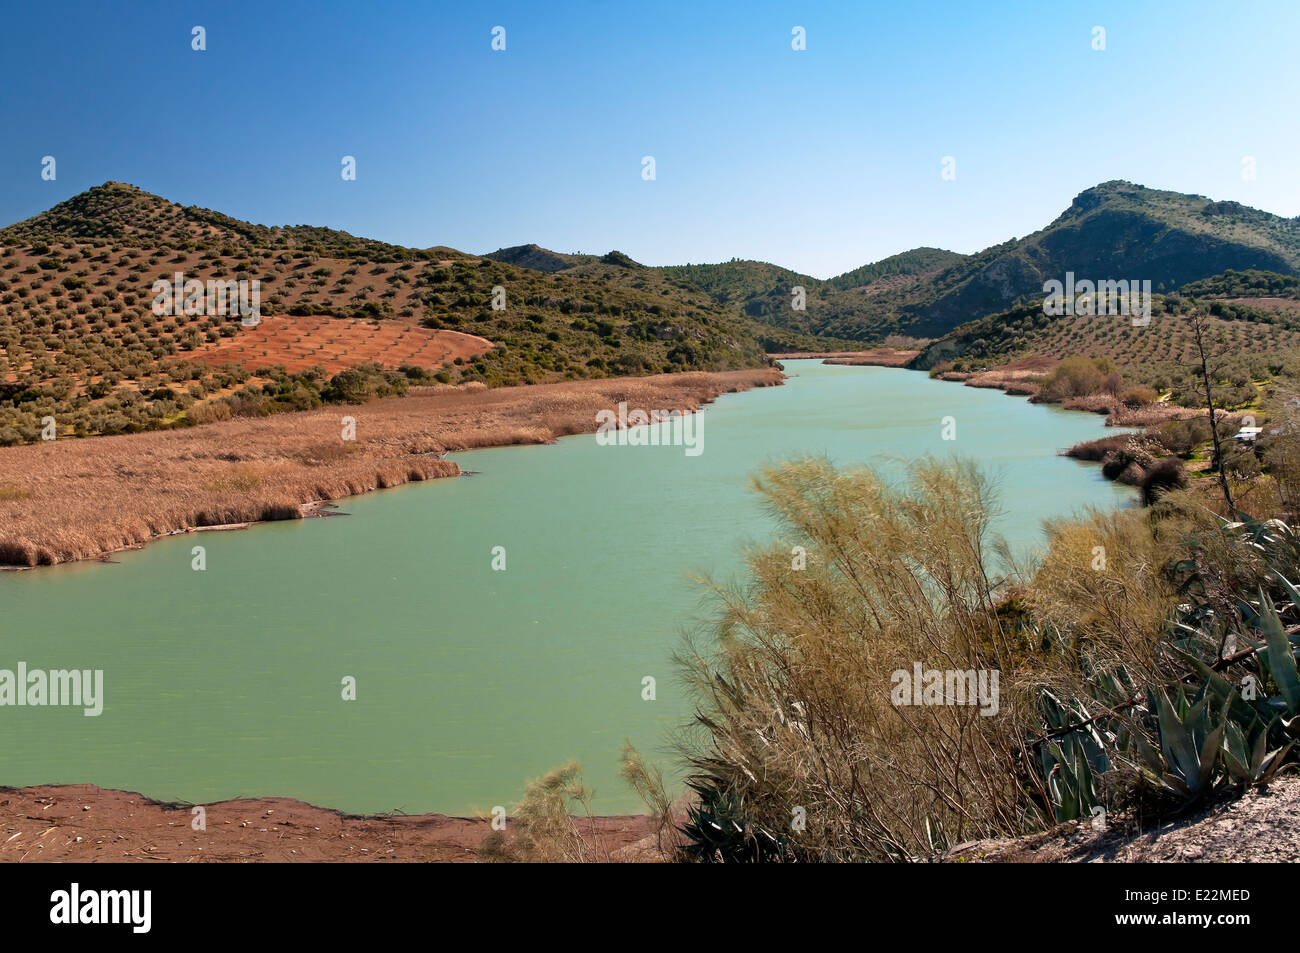 Malpasillo Reservoir Natural Area, The Tourist Route of the Bandits, Badolatosa, Seville province, Region of Andalusia, Spain, Europe Stock Photo